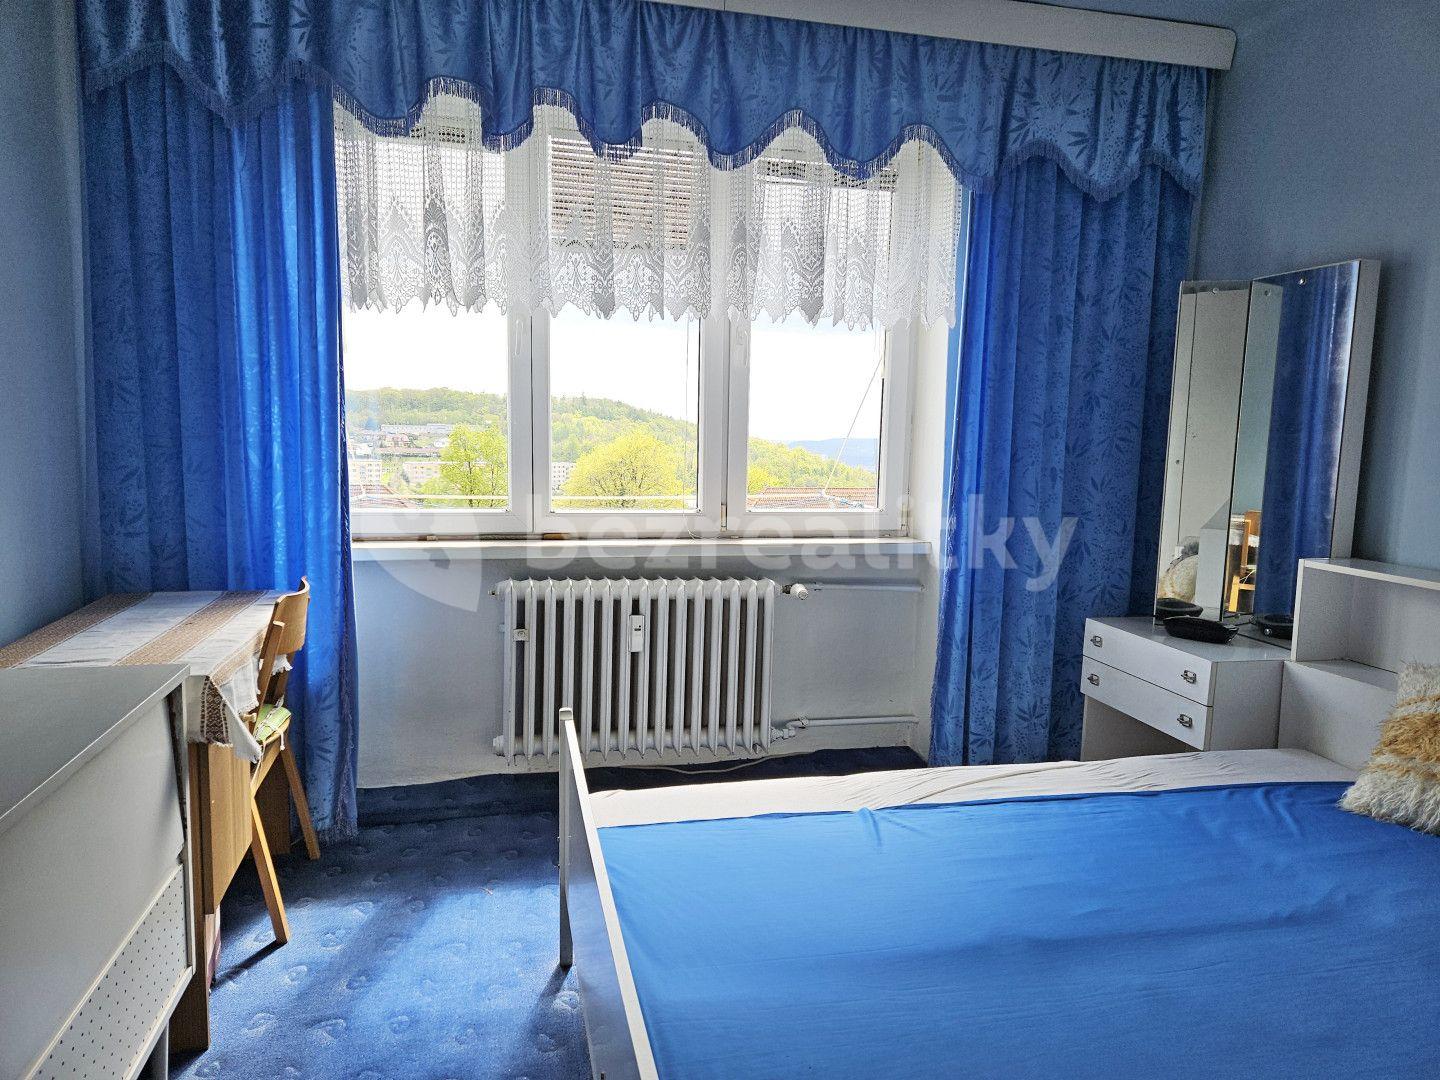 2 bedroom flat for sale, 59 m², Hornická, Meziboří, Ústecký Region